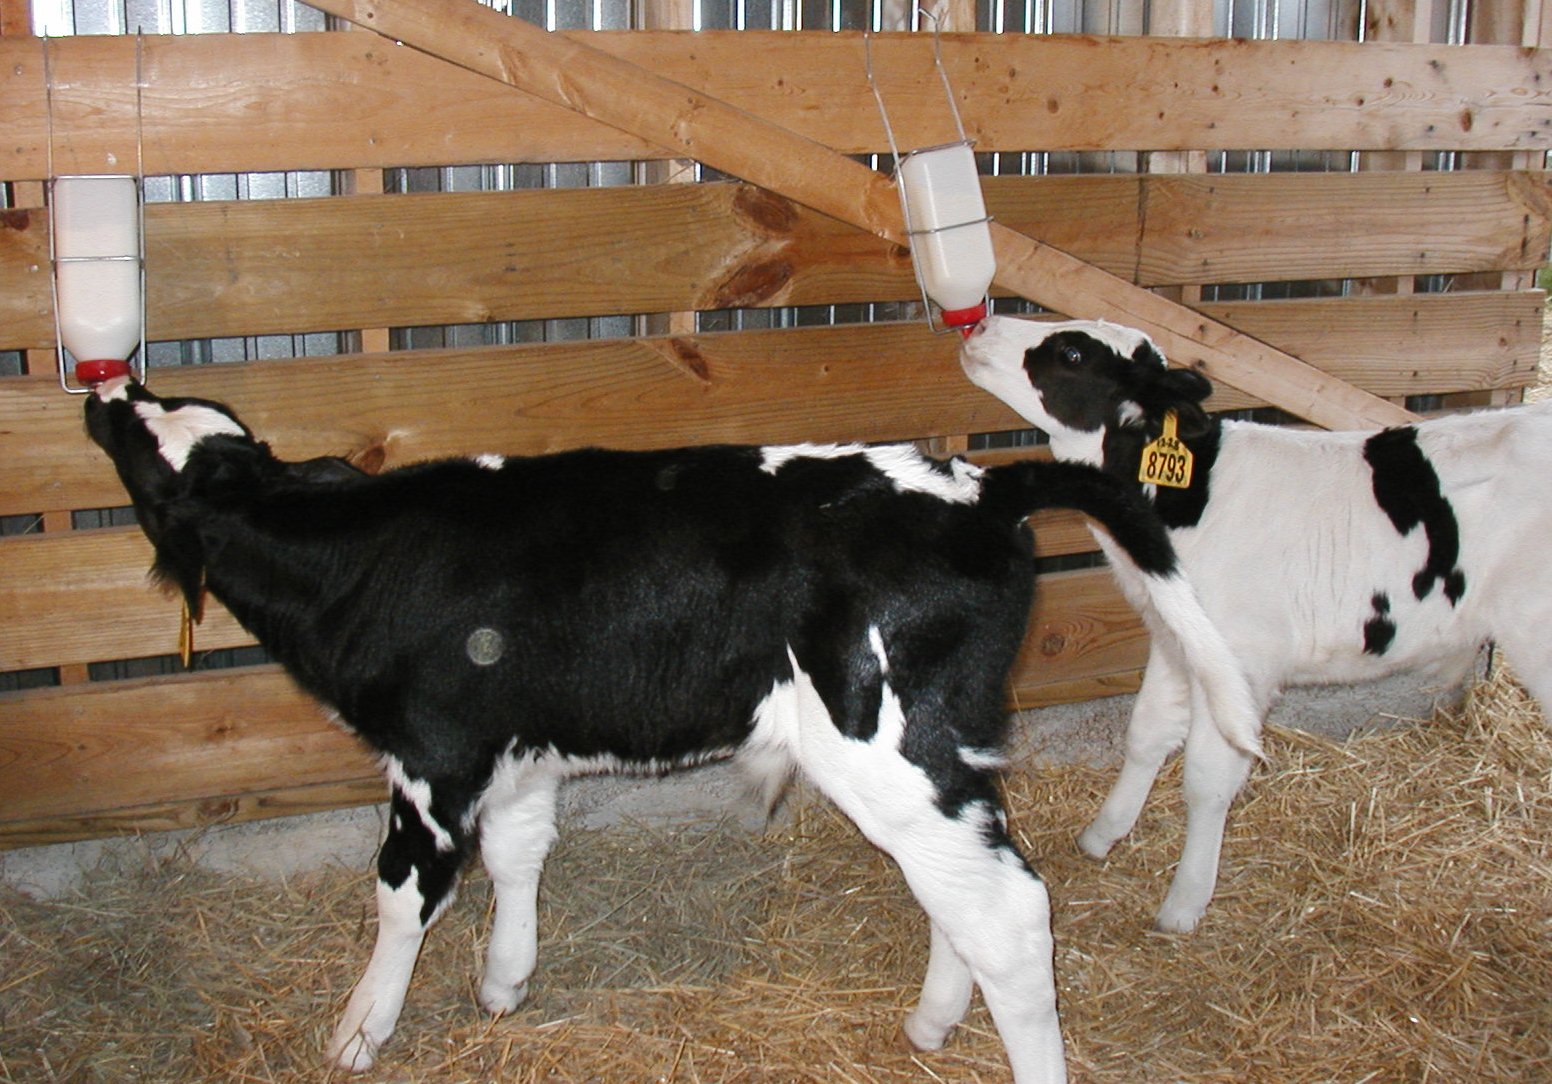 Calf Feeding Chart